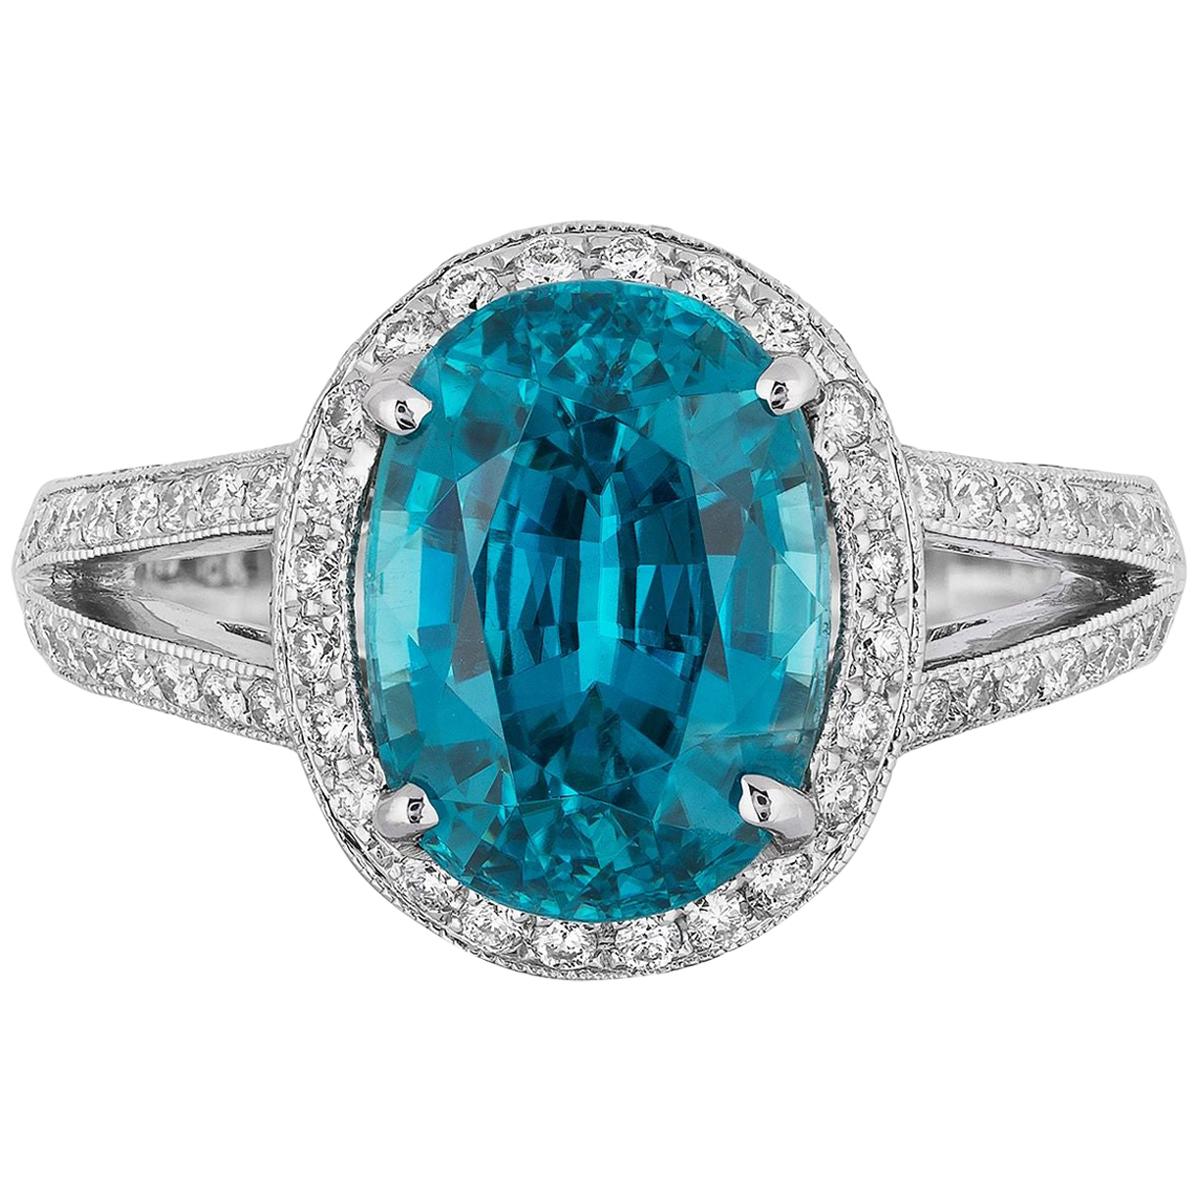 6.07 Carat Blue Zircon Diamond Cocktail Ring For Sale